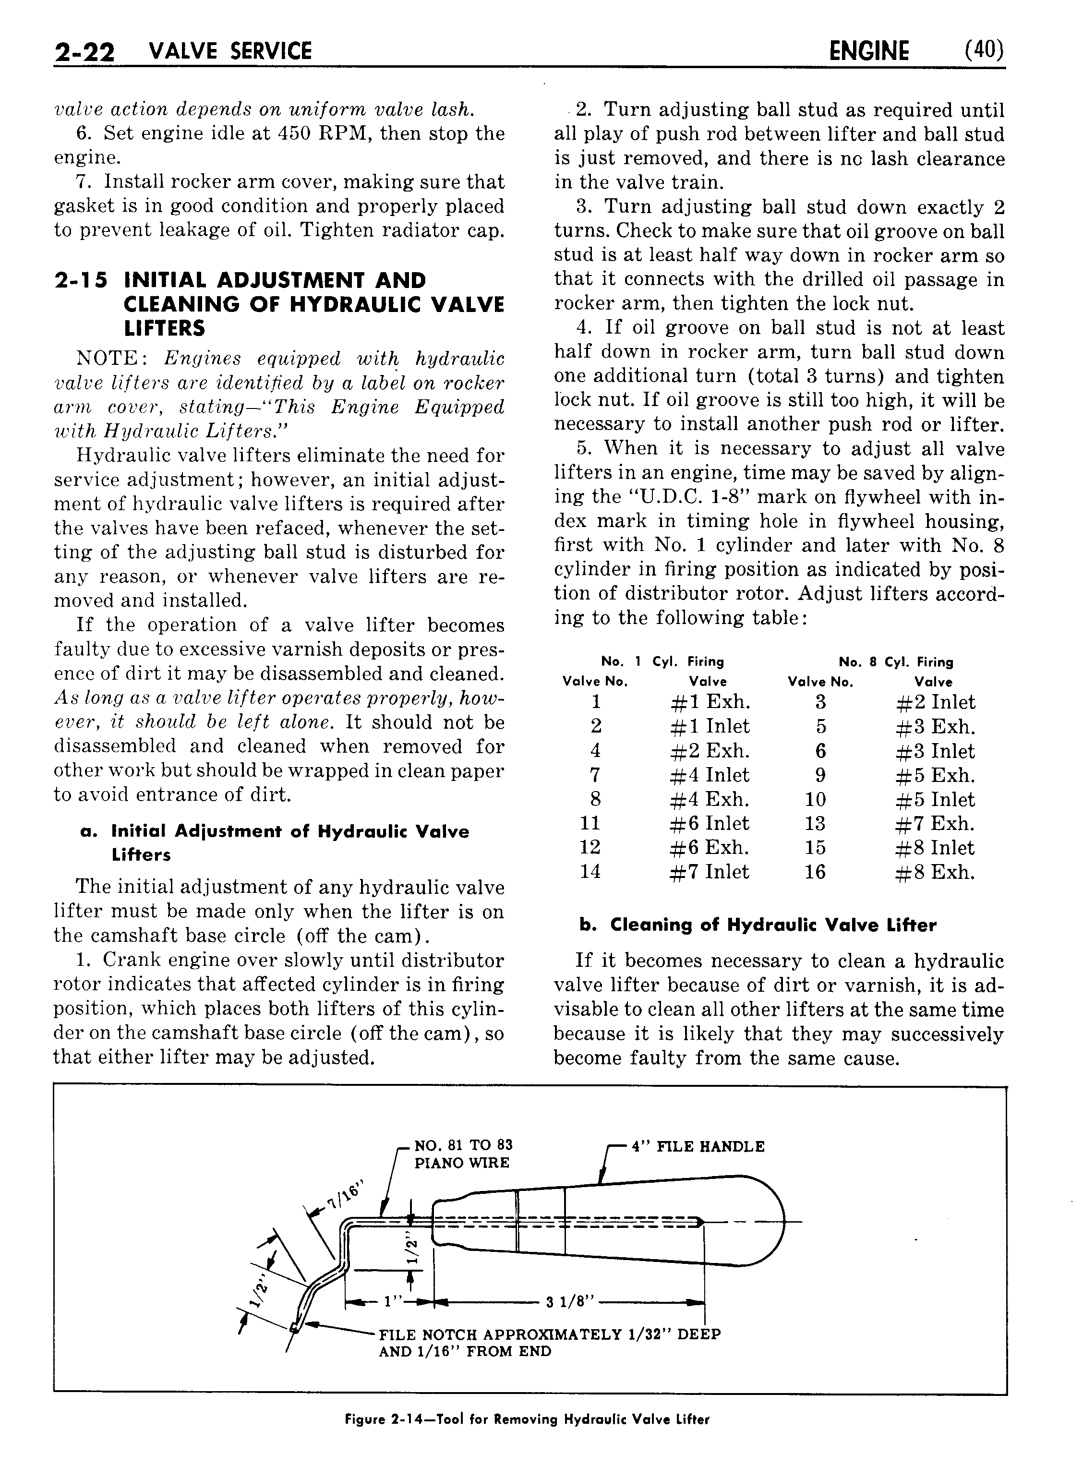 n_03 1951 Buick Shop Manual - Engine-022-022.jpg